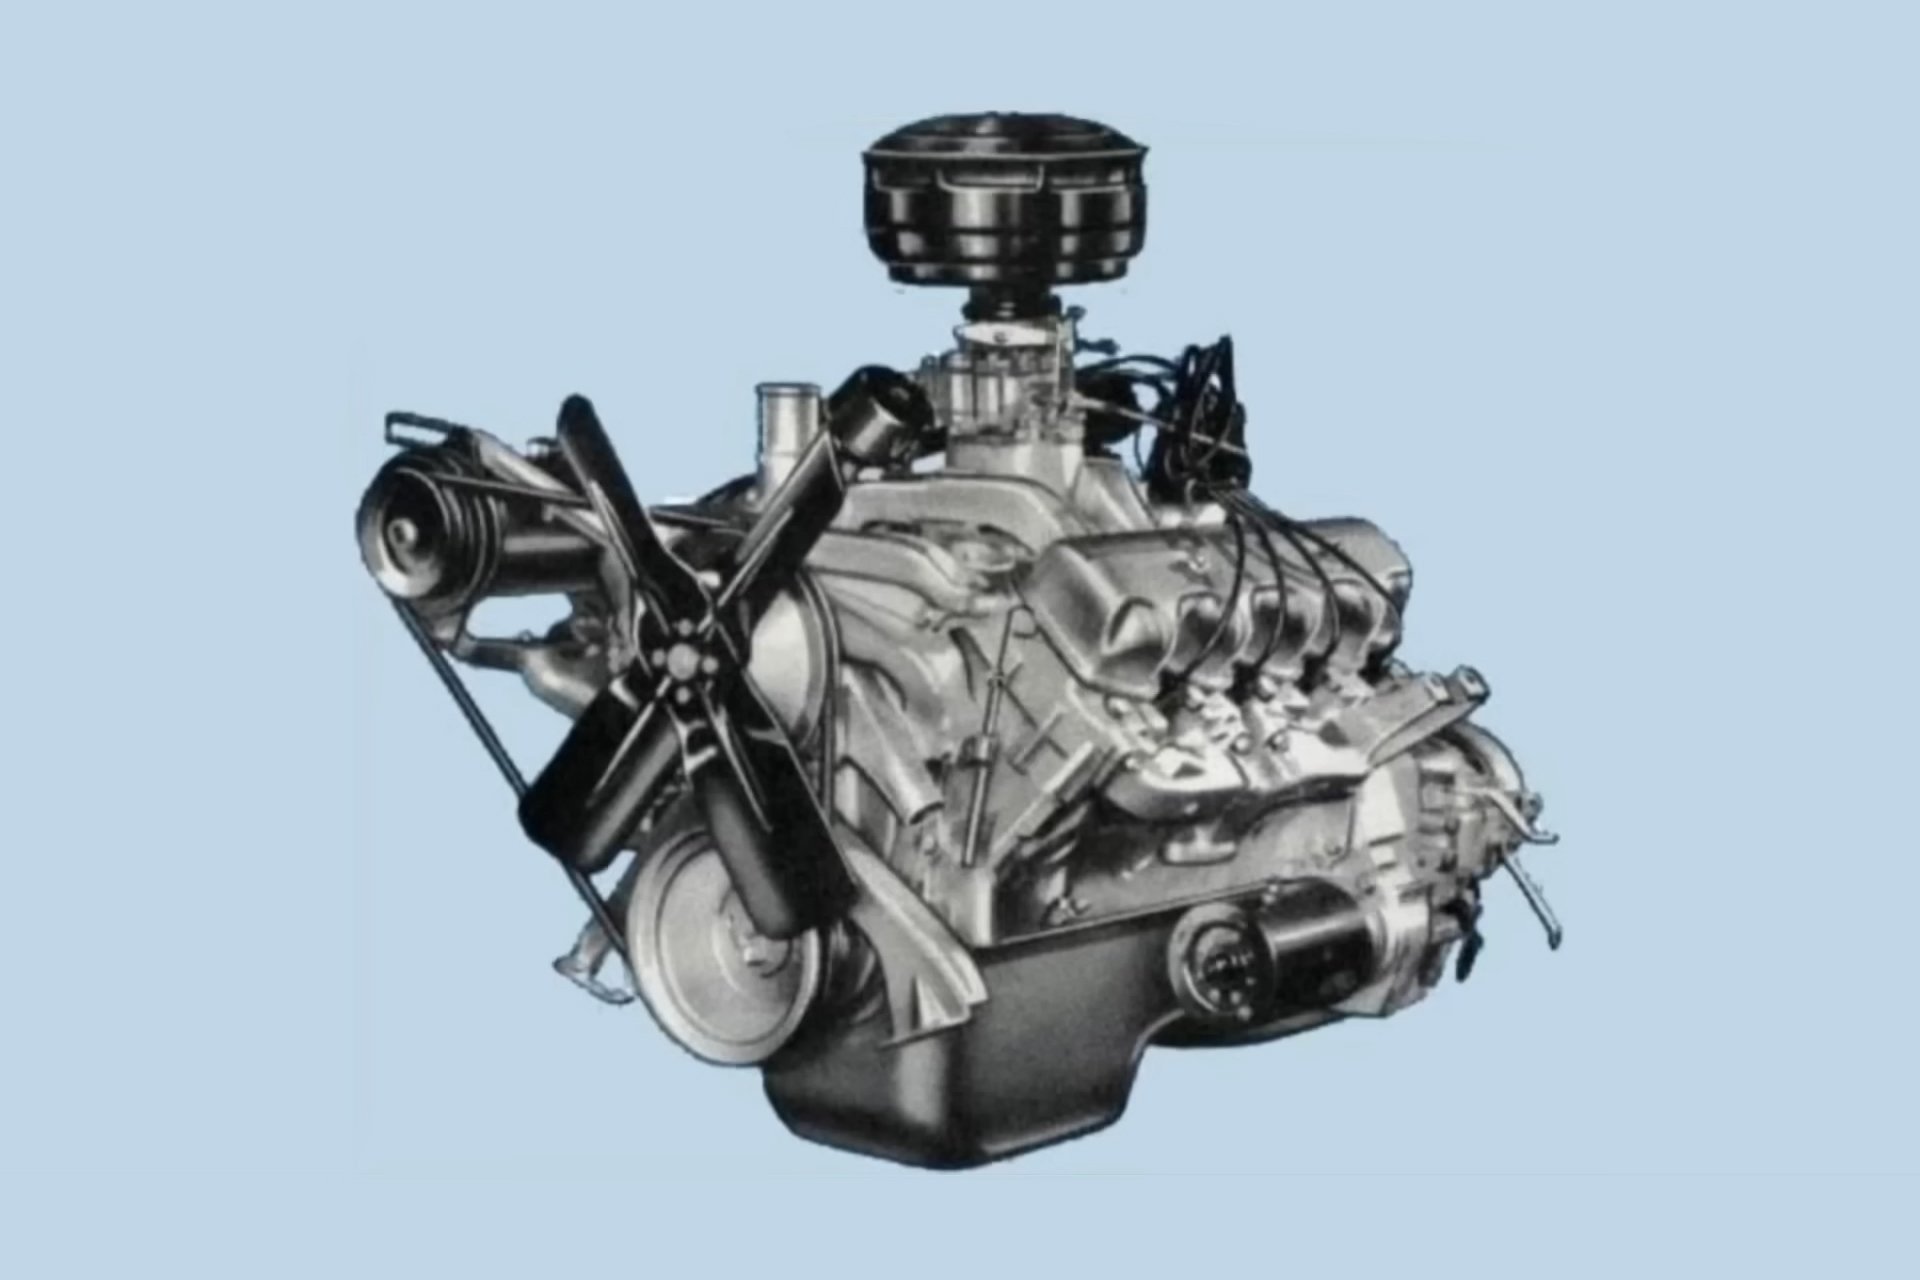 Polyspheric “Semi-Hemi” Engines: Chrysler Creativity or Cheap Junk?